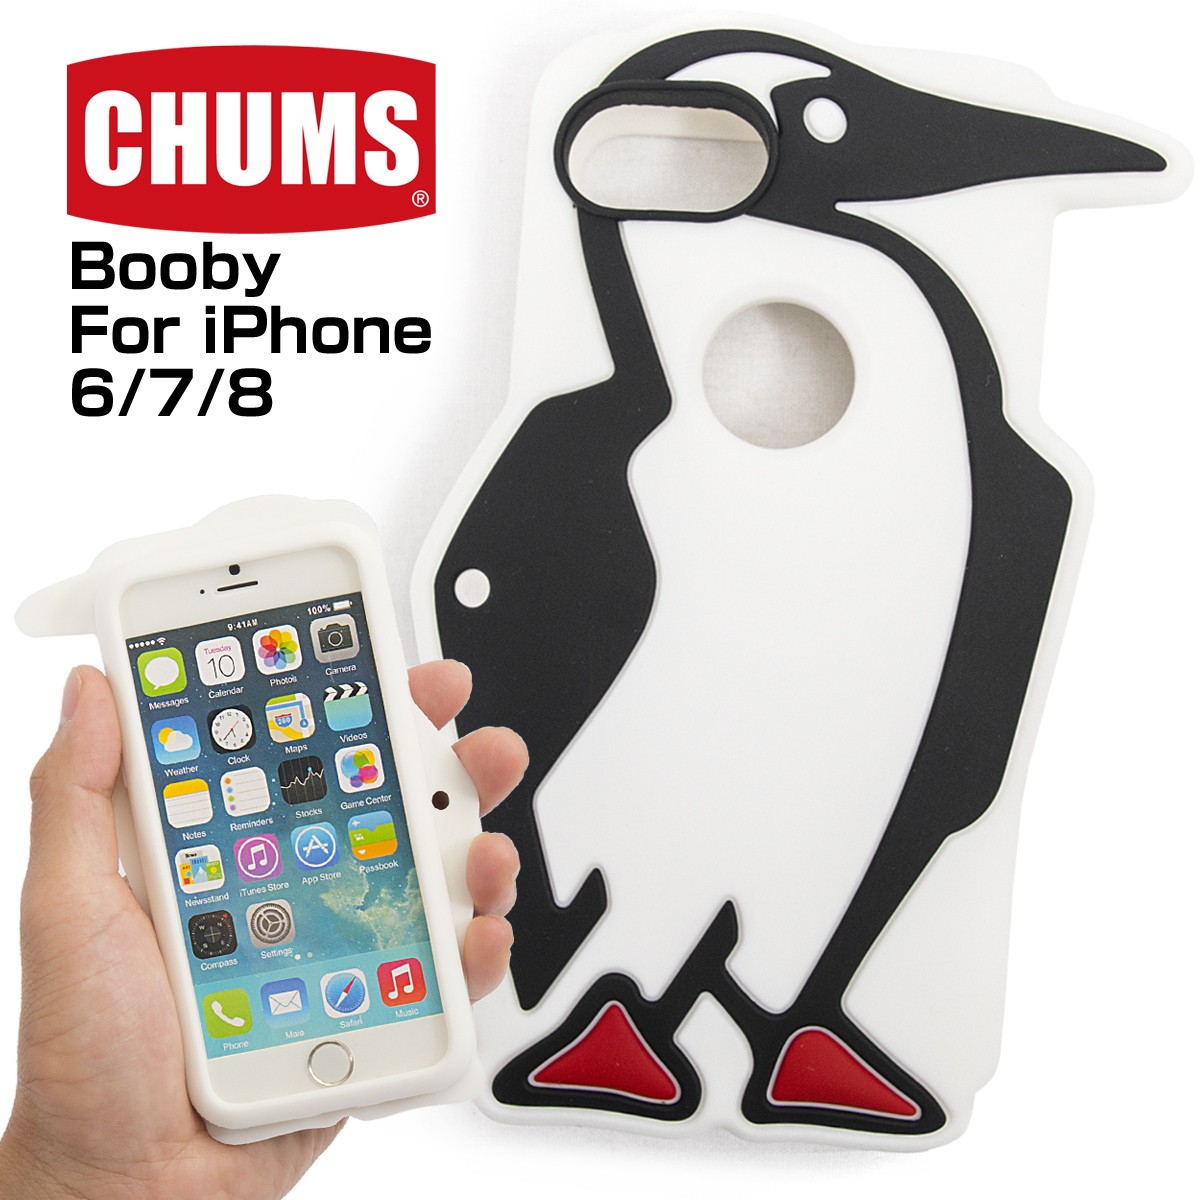 Chums チャムス Iphoneケース Booby For Iphone 6 7 8 Cm 560 2m50cm 通販 Yahoo ショッピング